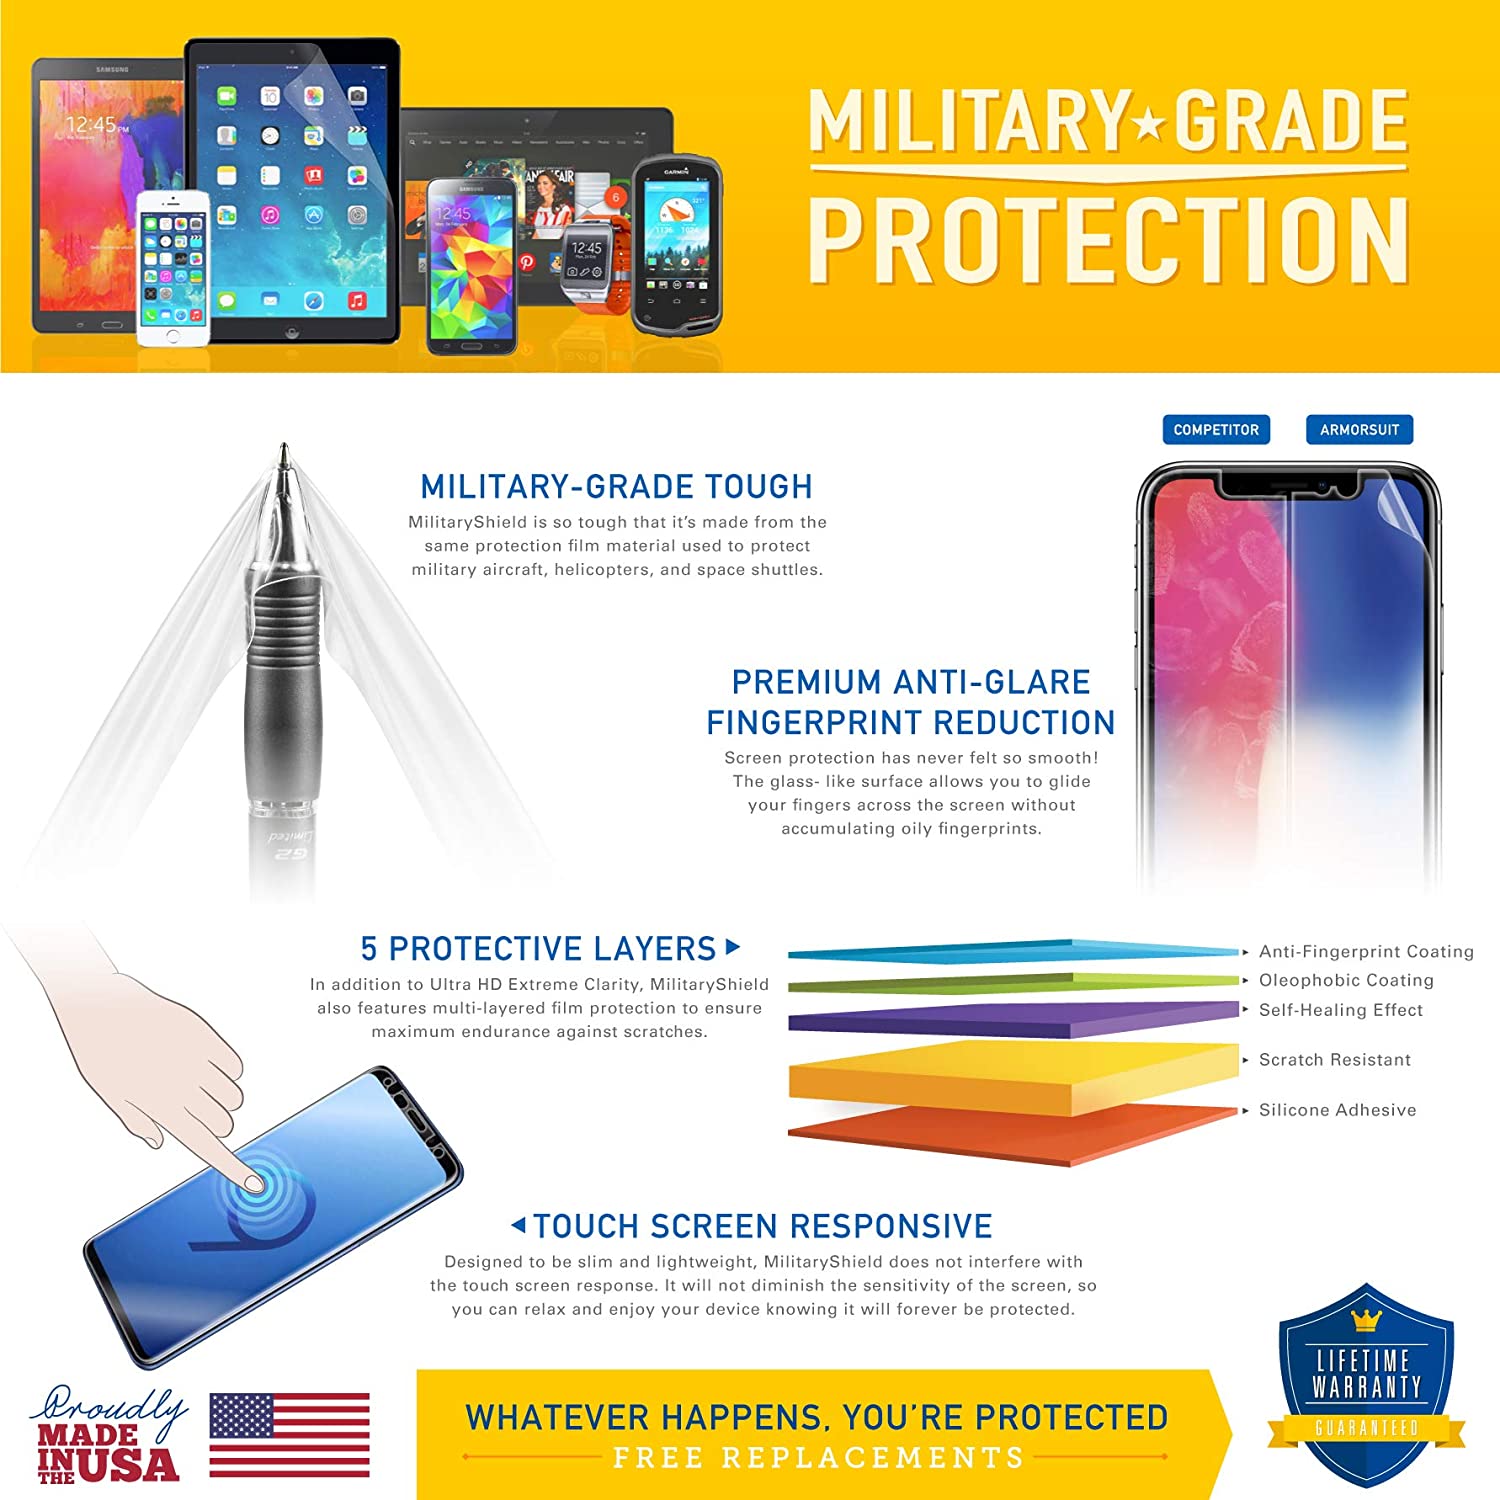 Motorola Moto G (3rd Generation 2015) Screen Protector + White Carbon Fiber Full Body Skin Protector